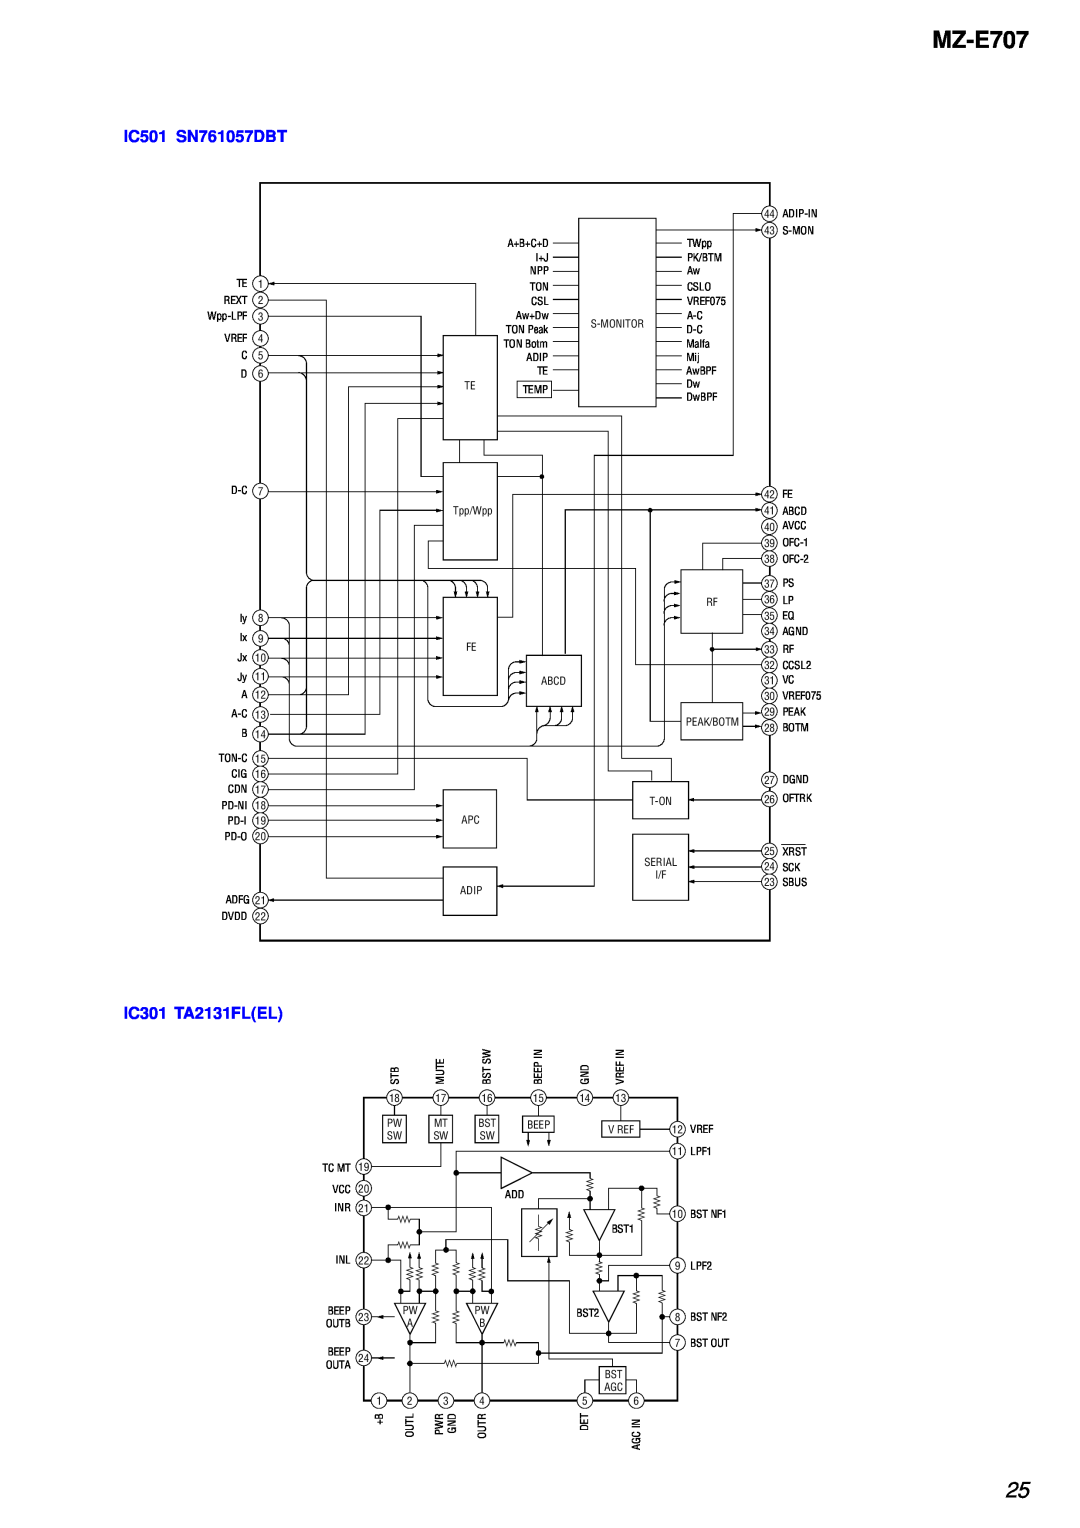 Sony MZ-E707 service manual IC501 SN761057DBT, IC301 TA2131FLEL 